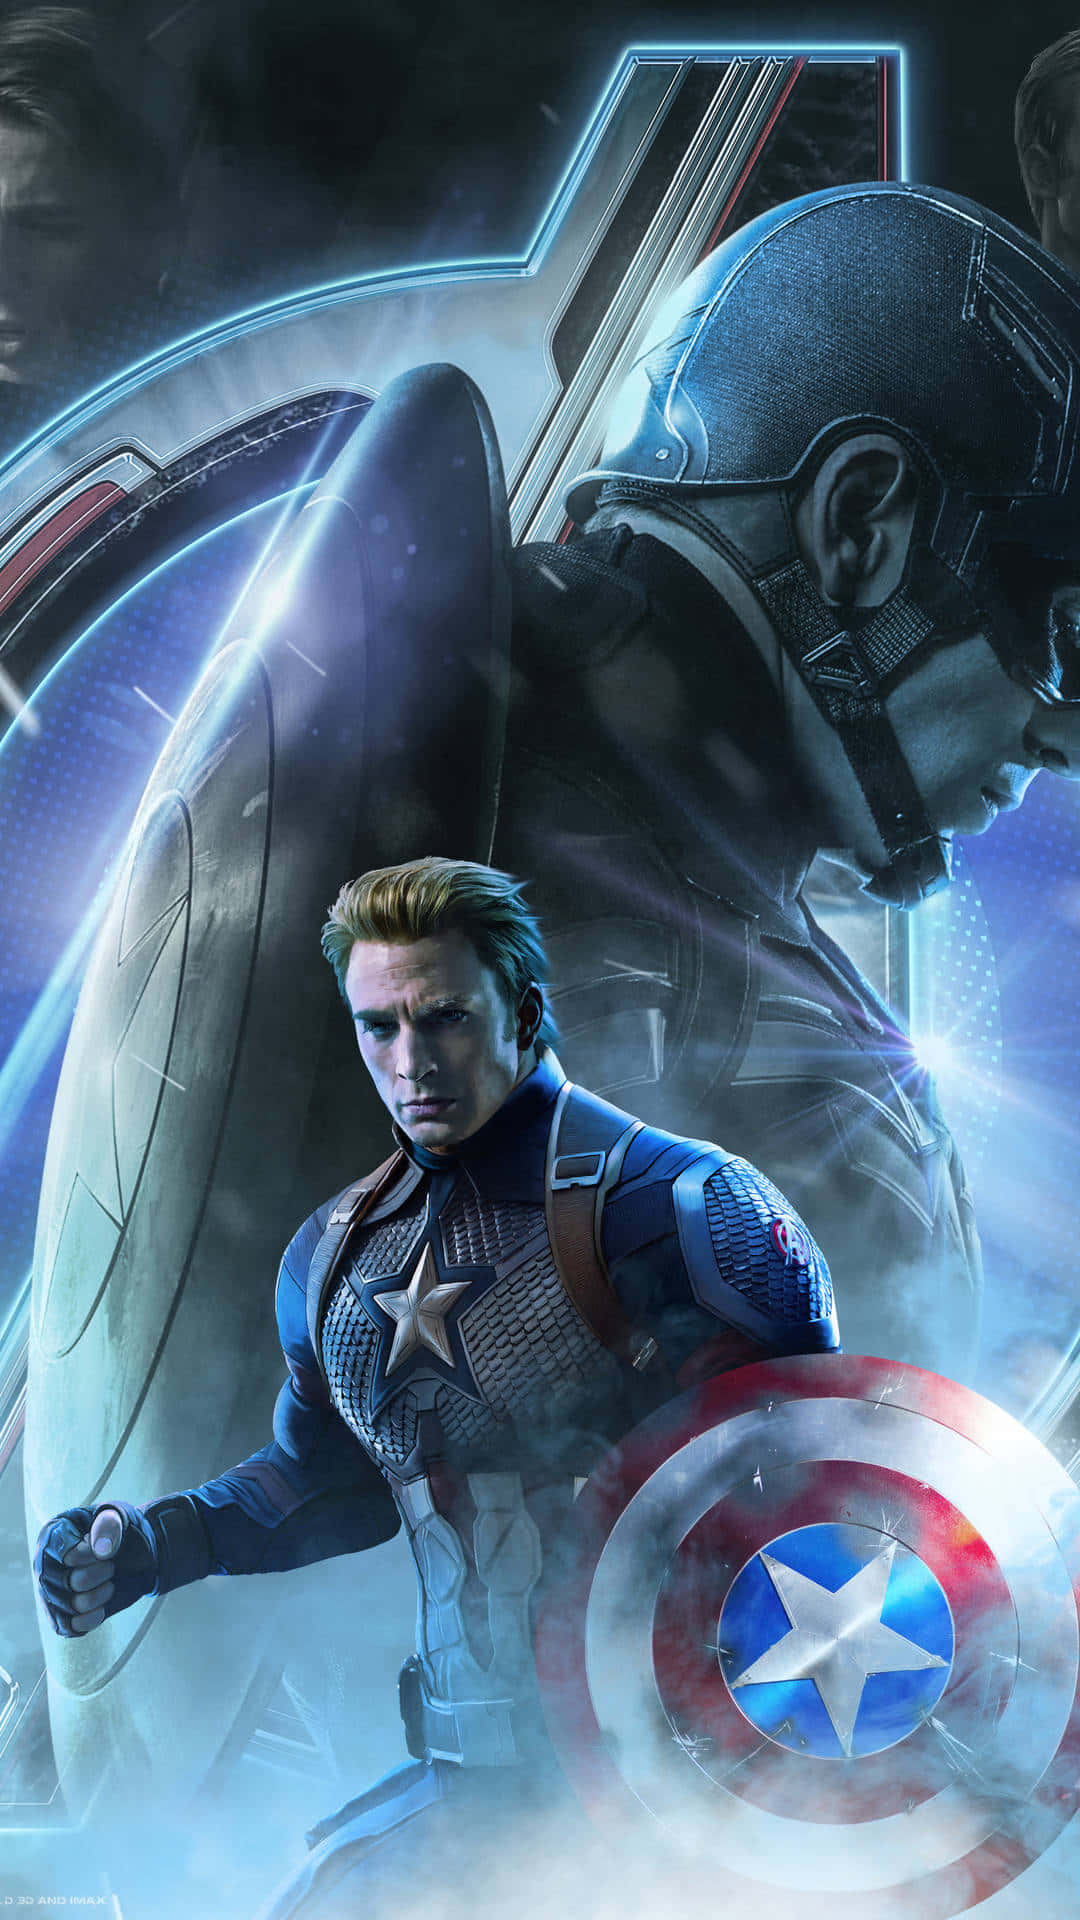 Hdhintergrundbild Des Ikonischen Marvel-superhelden Captain America